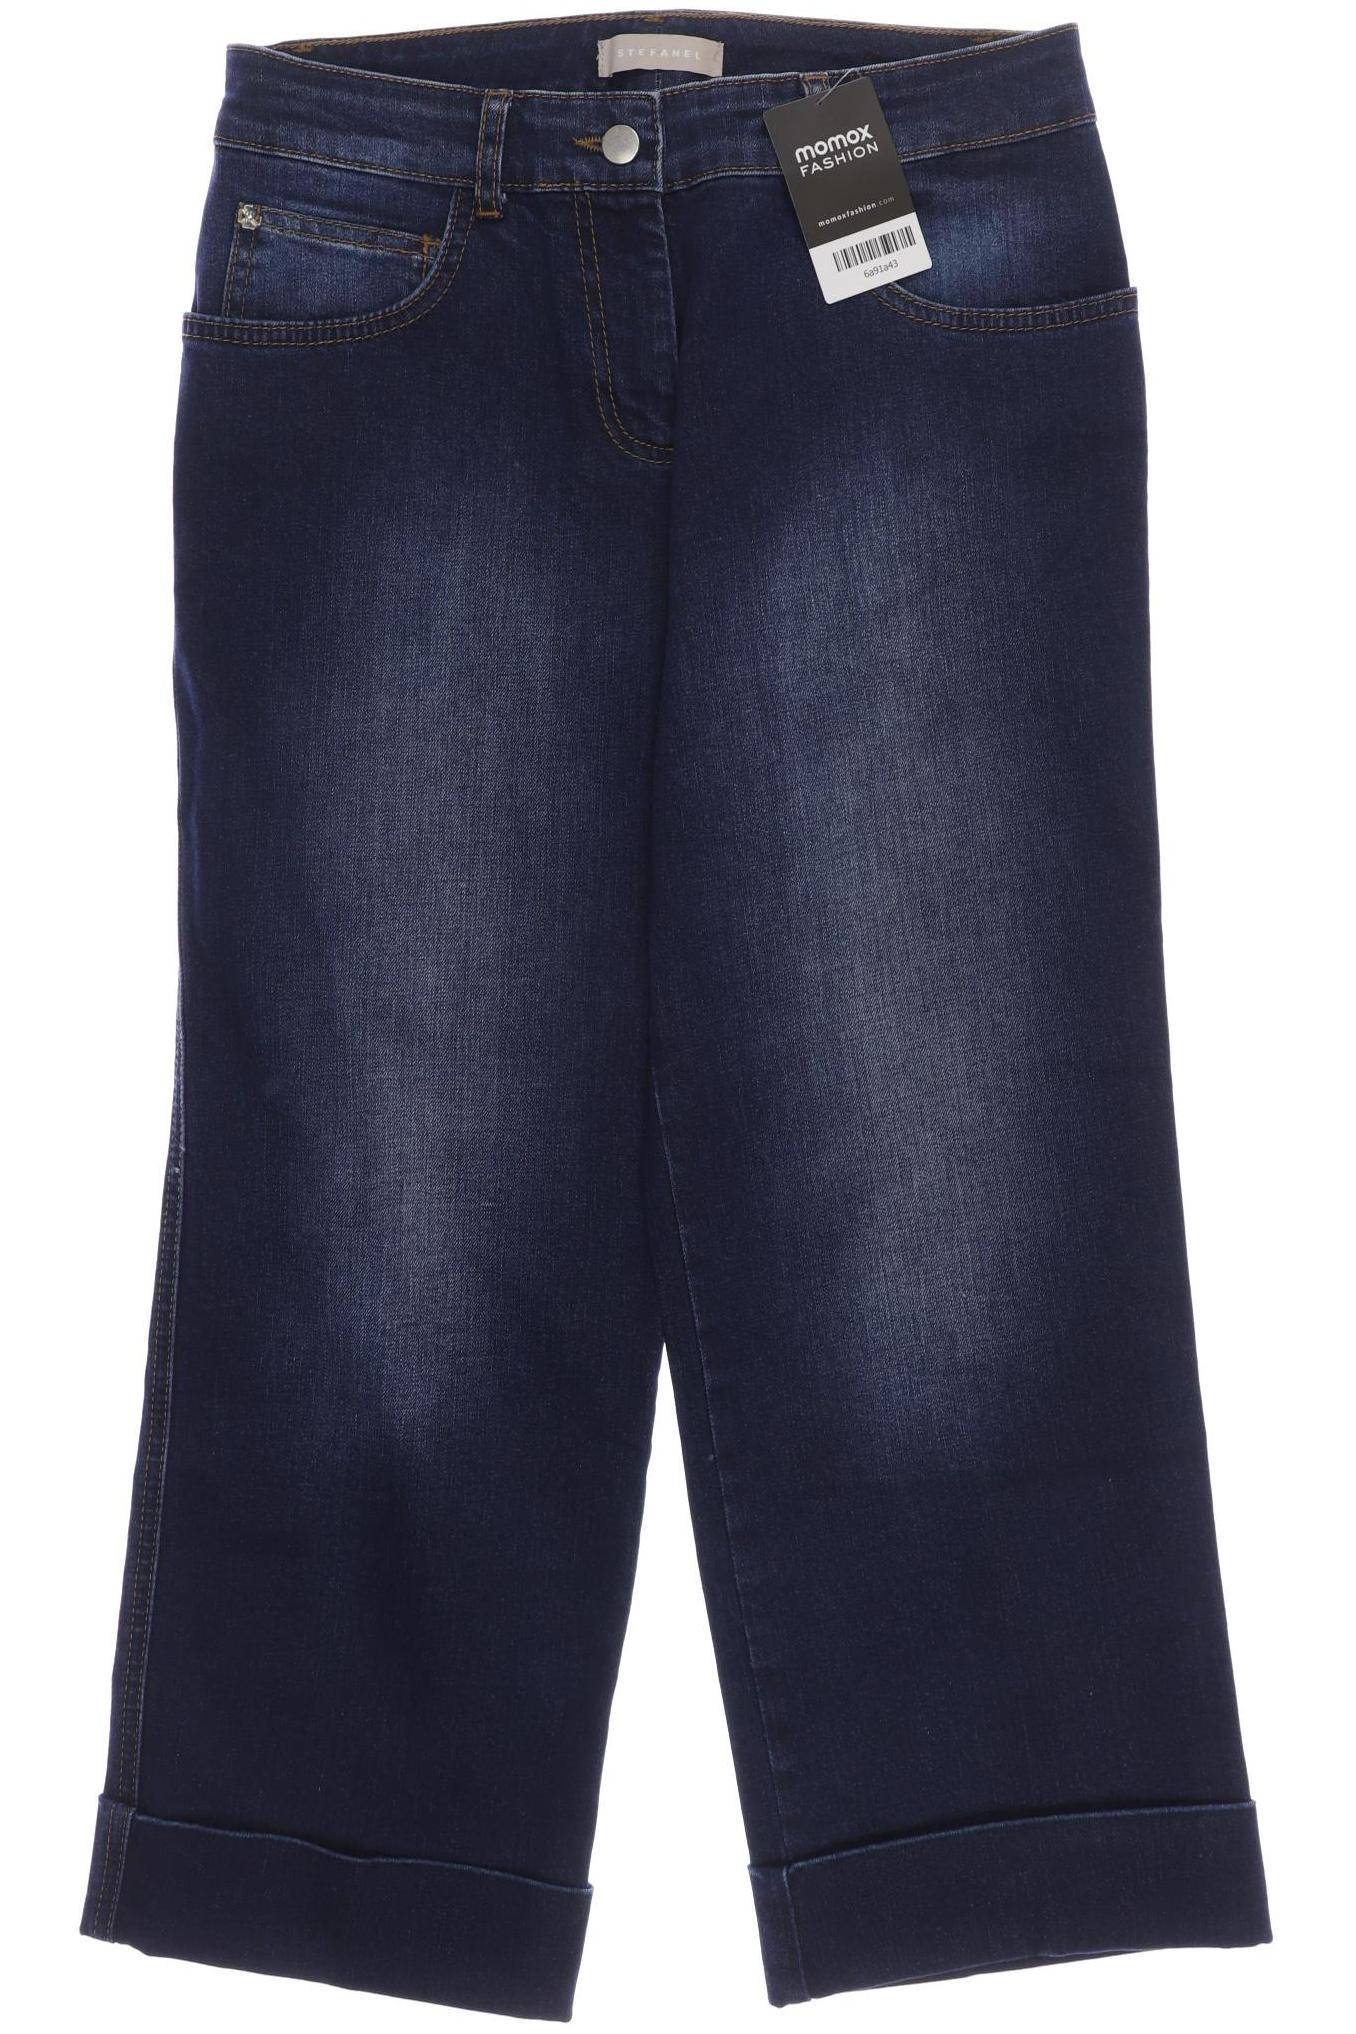 Stefanel Damen Jeans, blau, Gr. 34 von Stefanel